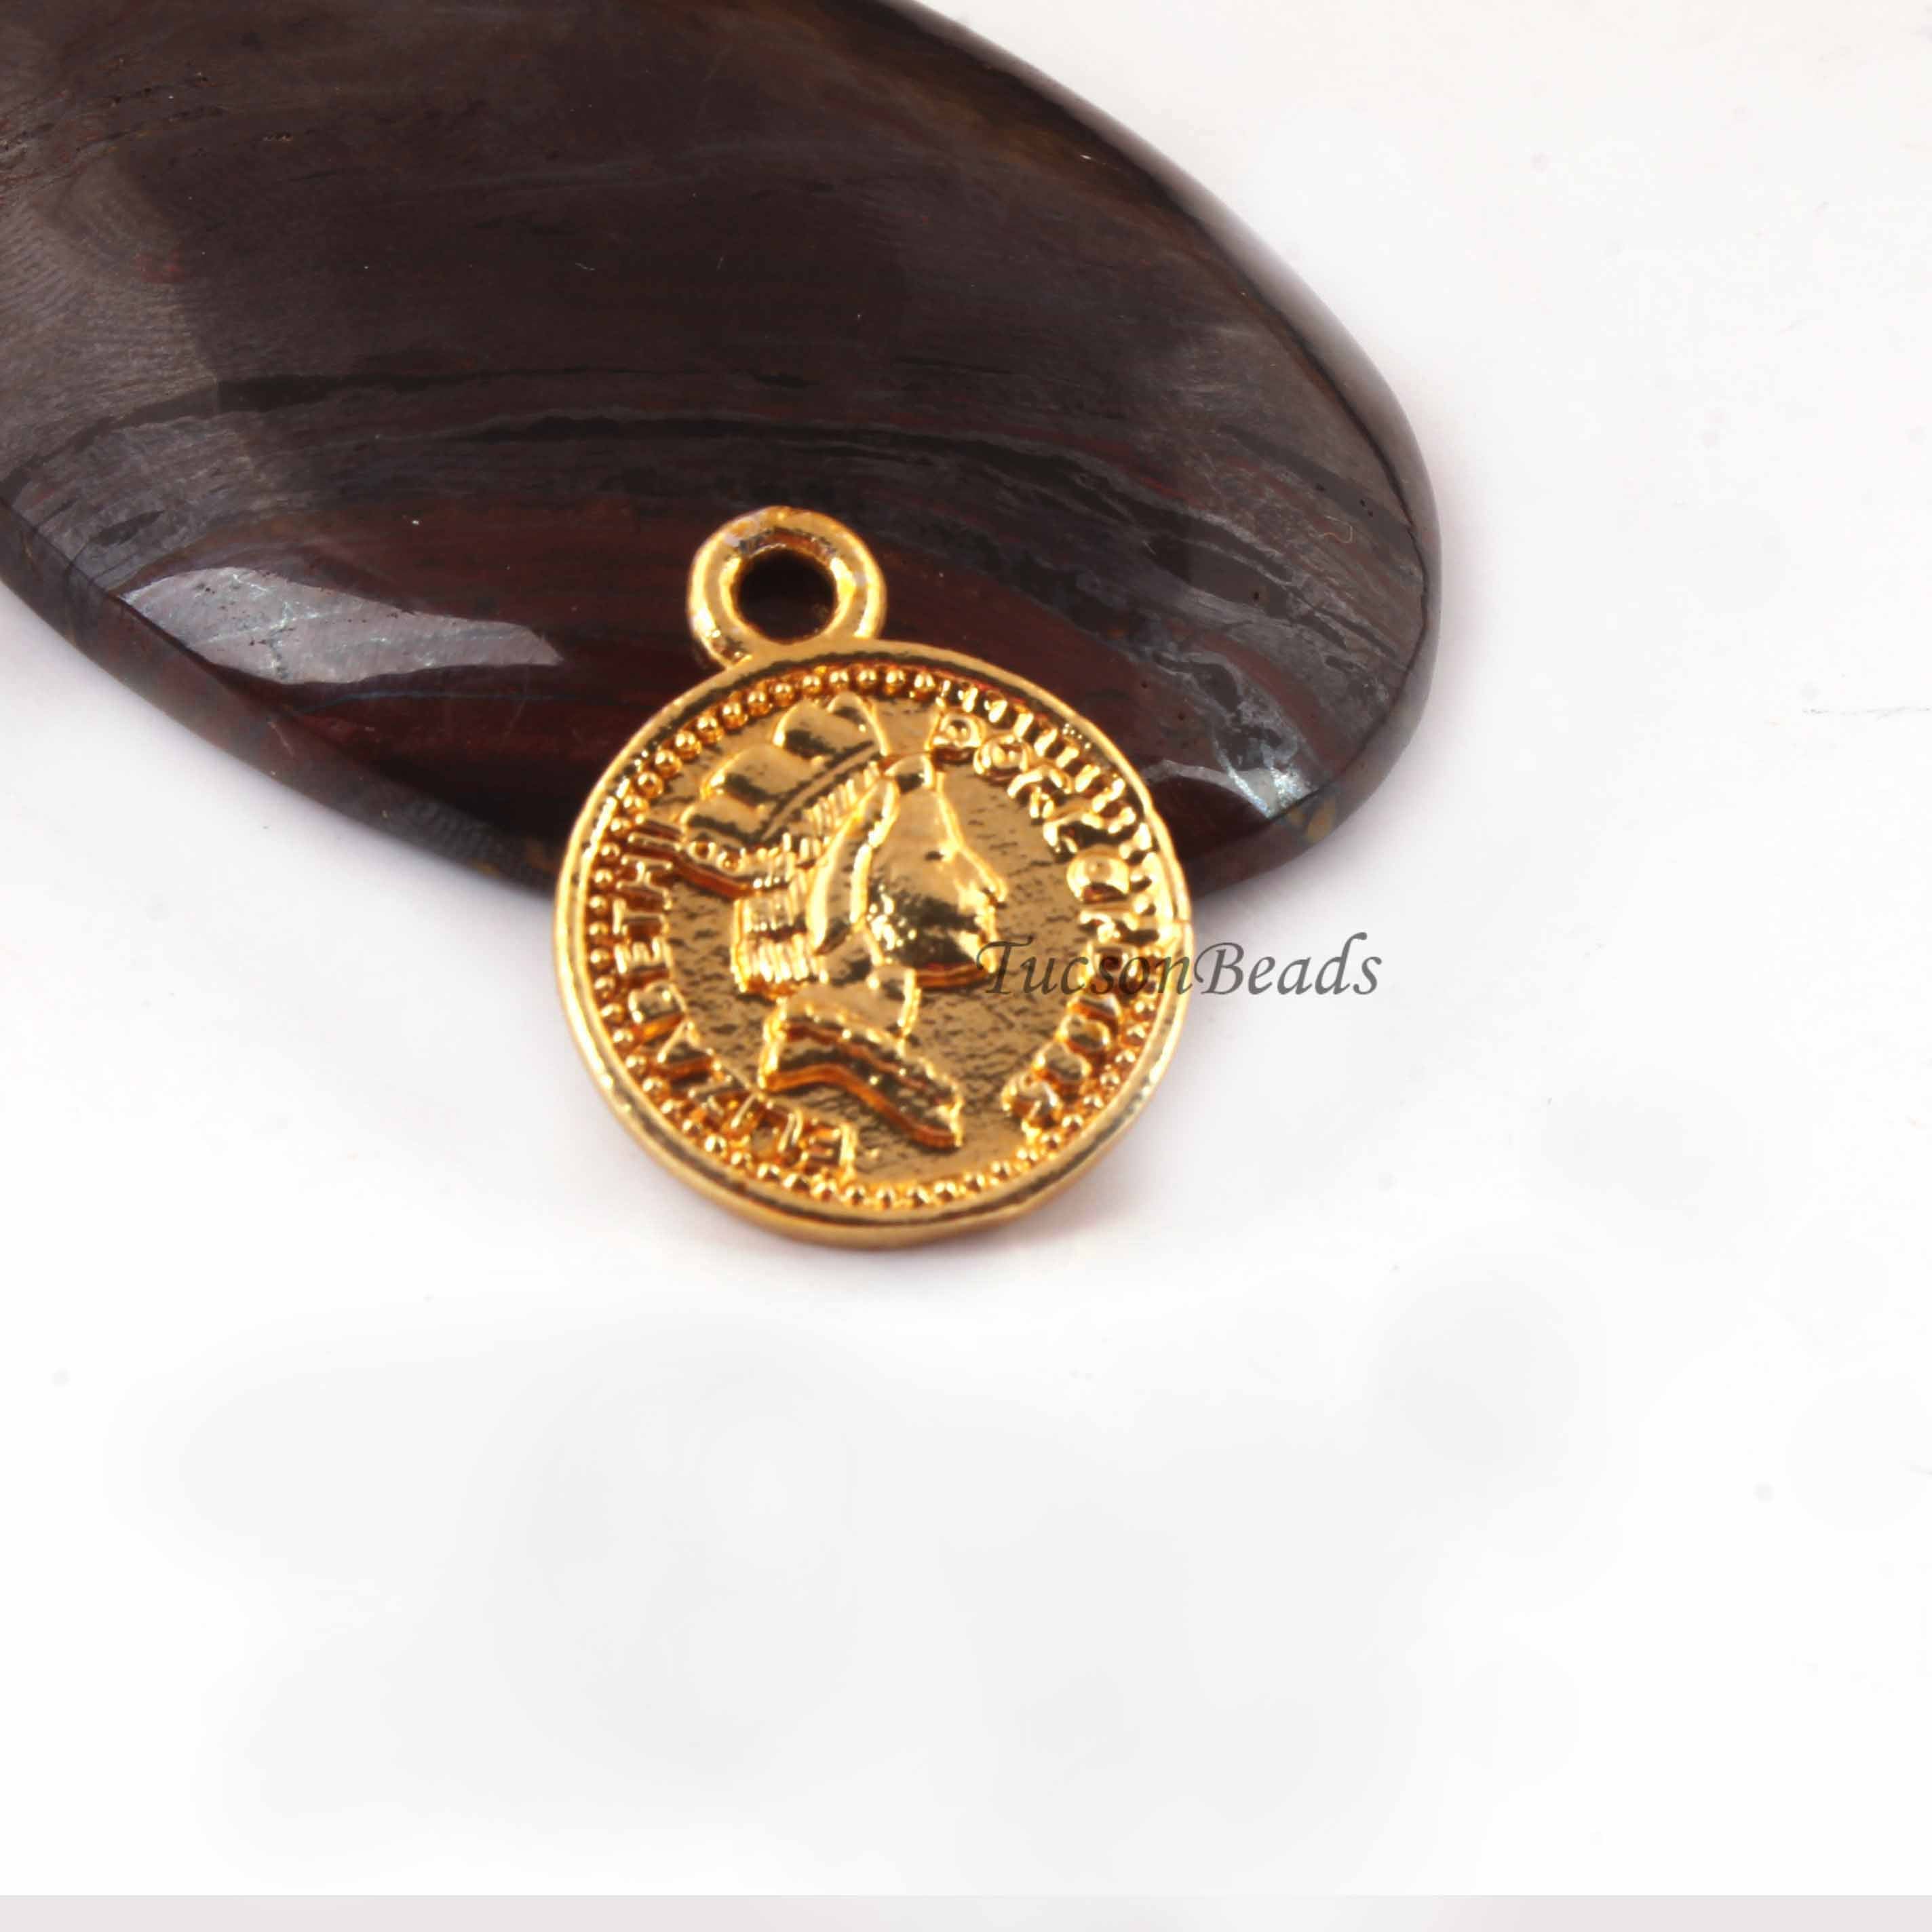 Gold Plated Designer Flower Charms Pendant , Beautiful Gold Flower Charm Pendant, Jewelry Making Supplies